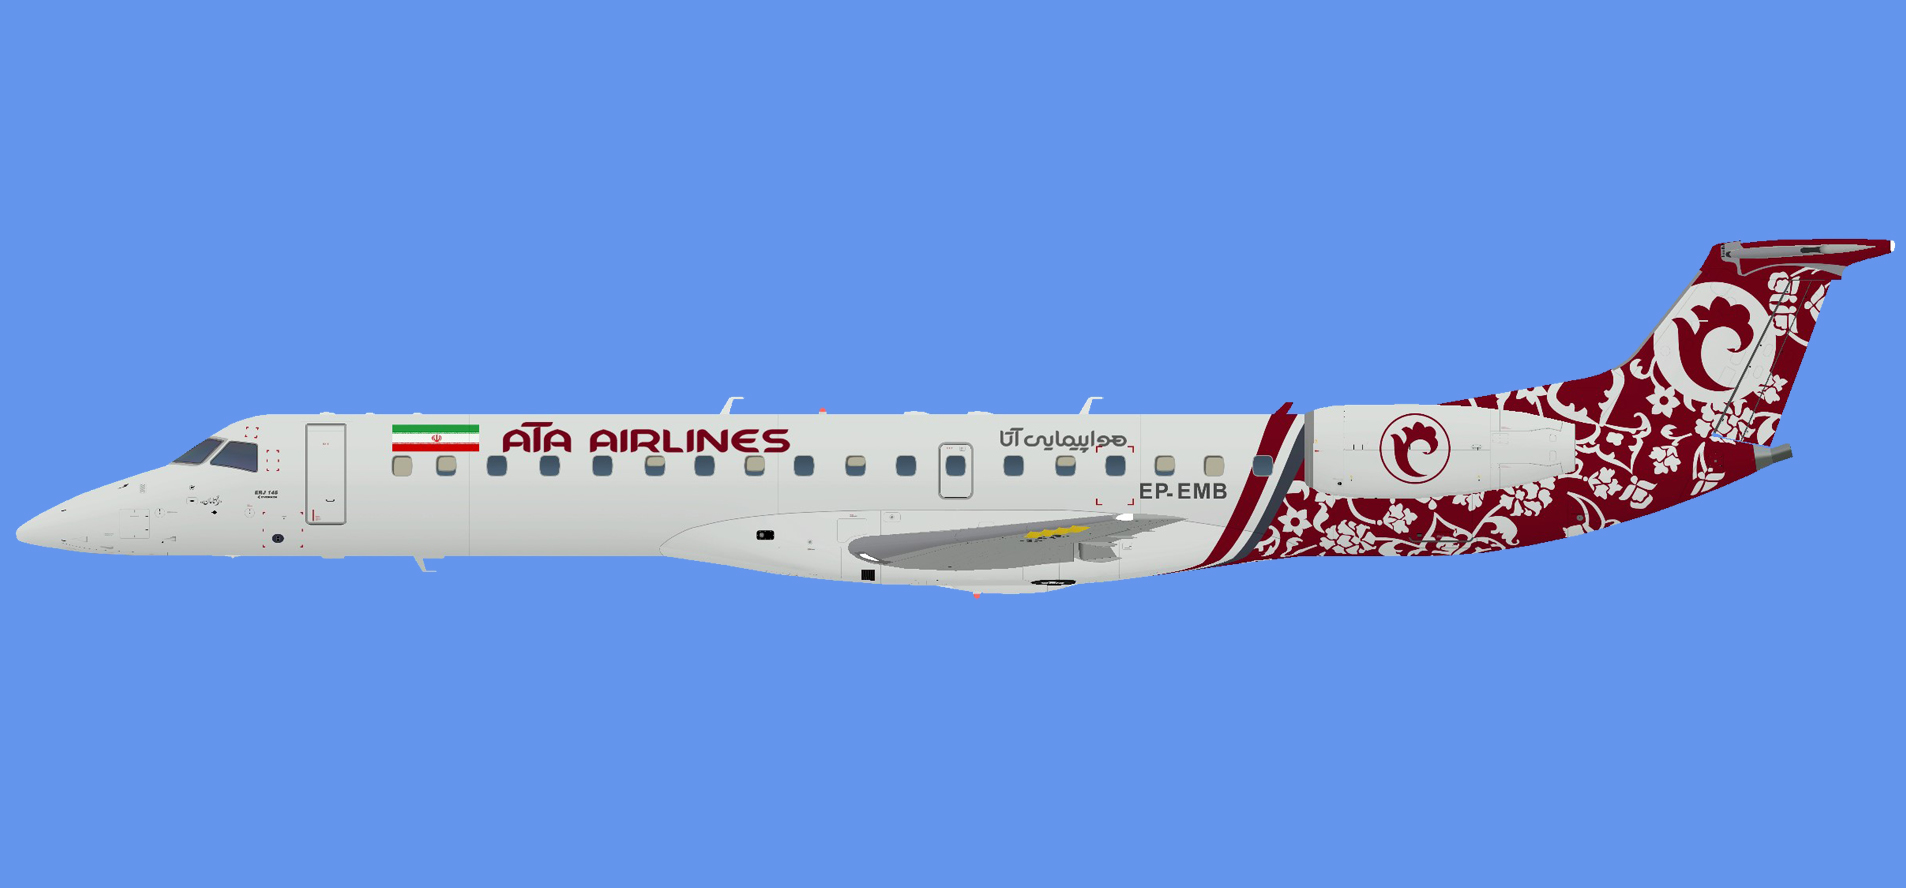 Ata Airlines ERJ-145